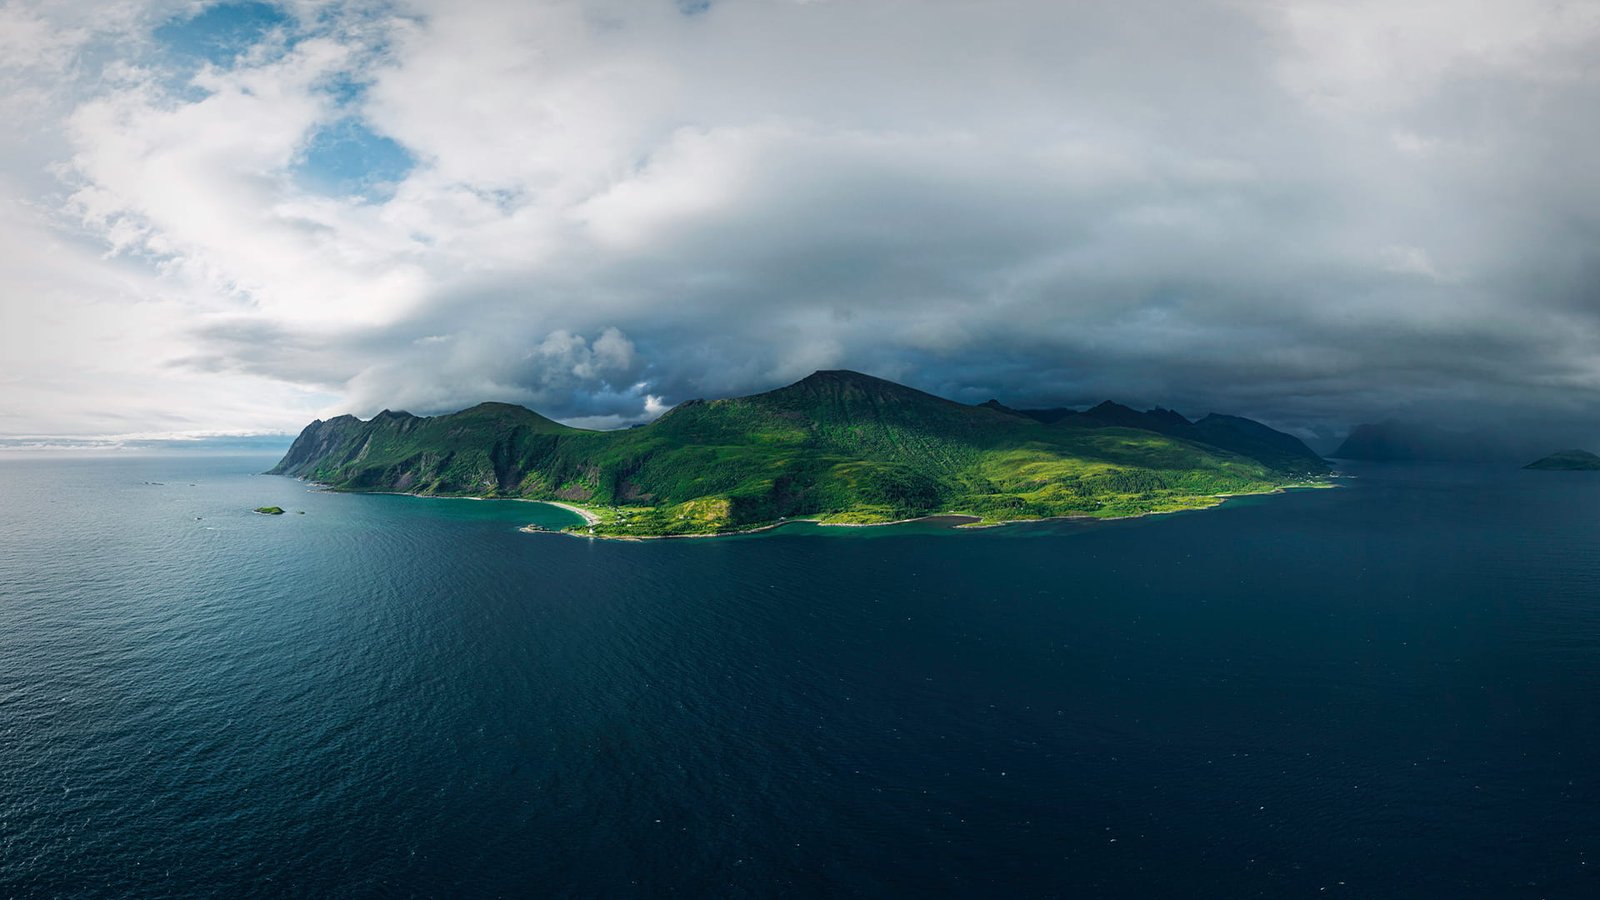 The beautiful island of Senja with green foliage on a 360-degree photograph thumbnail